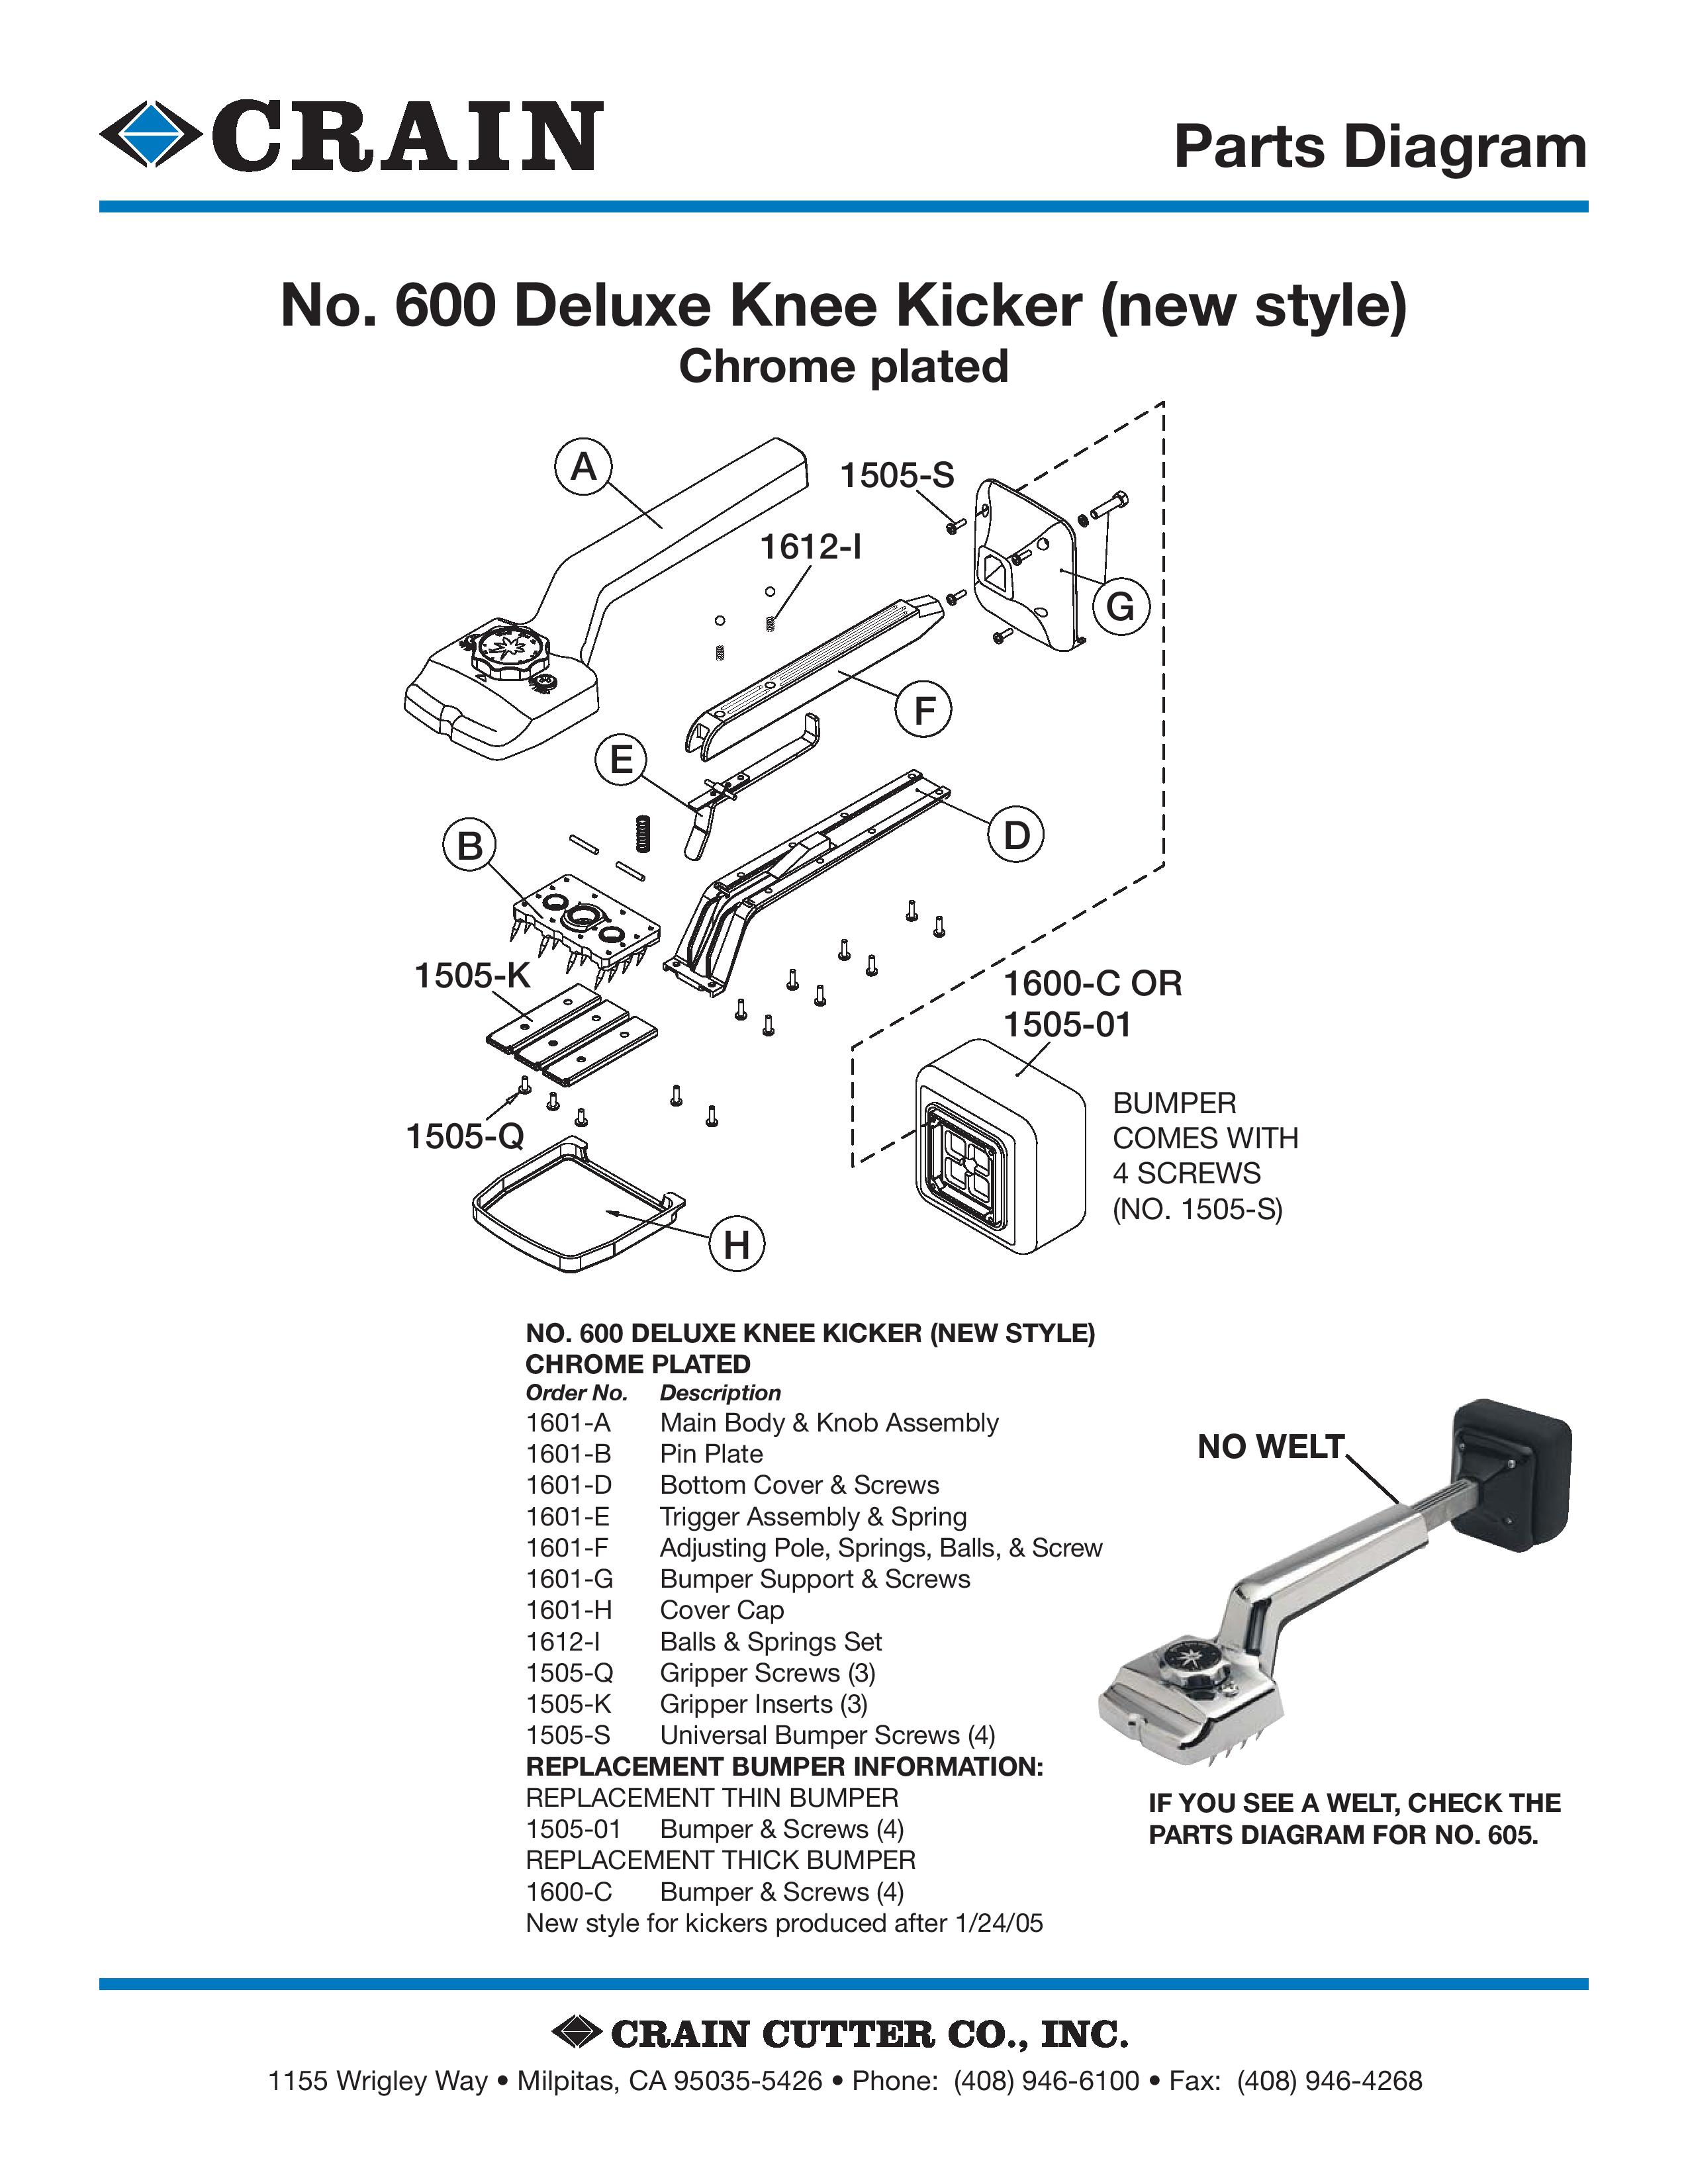 6x Knee Kicker Stretcher Nap Grip Inserts Replacement Parts